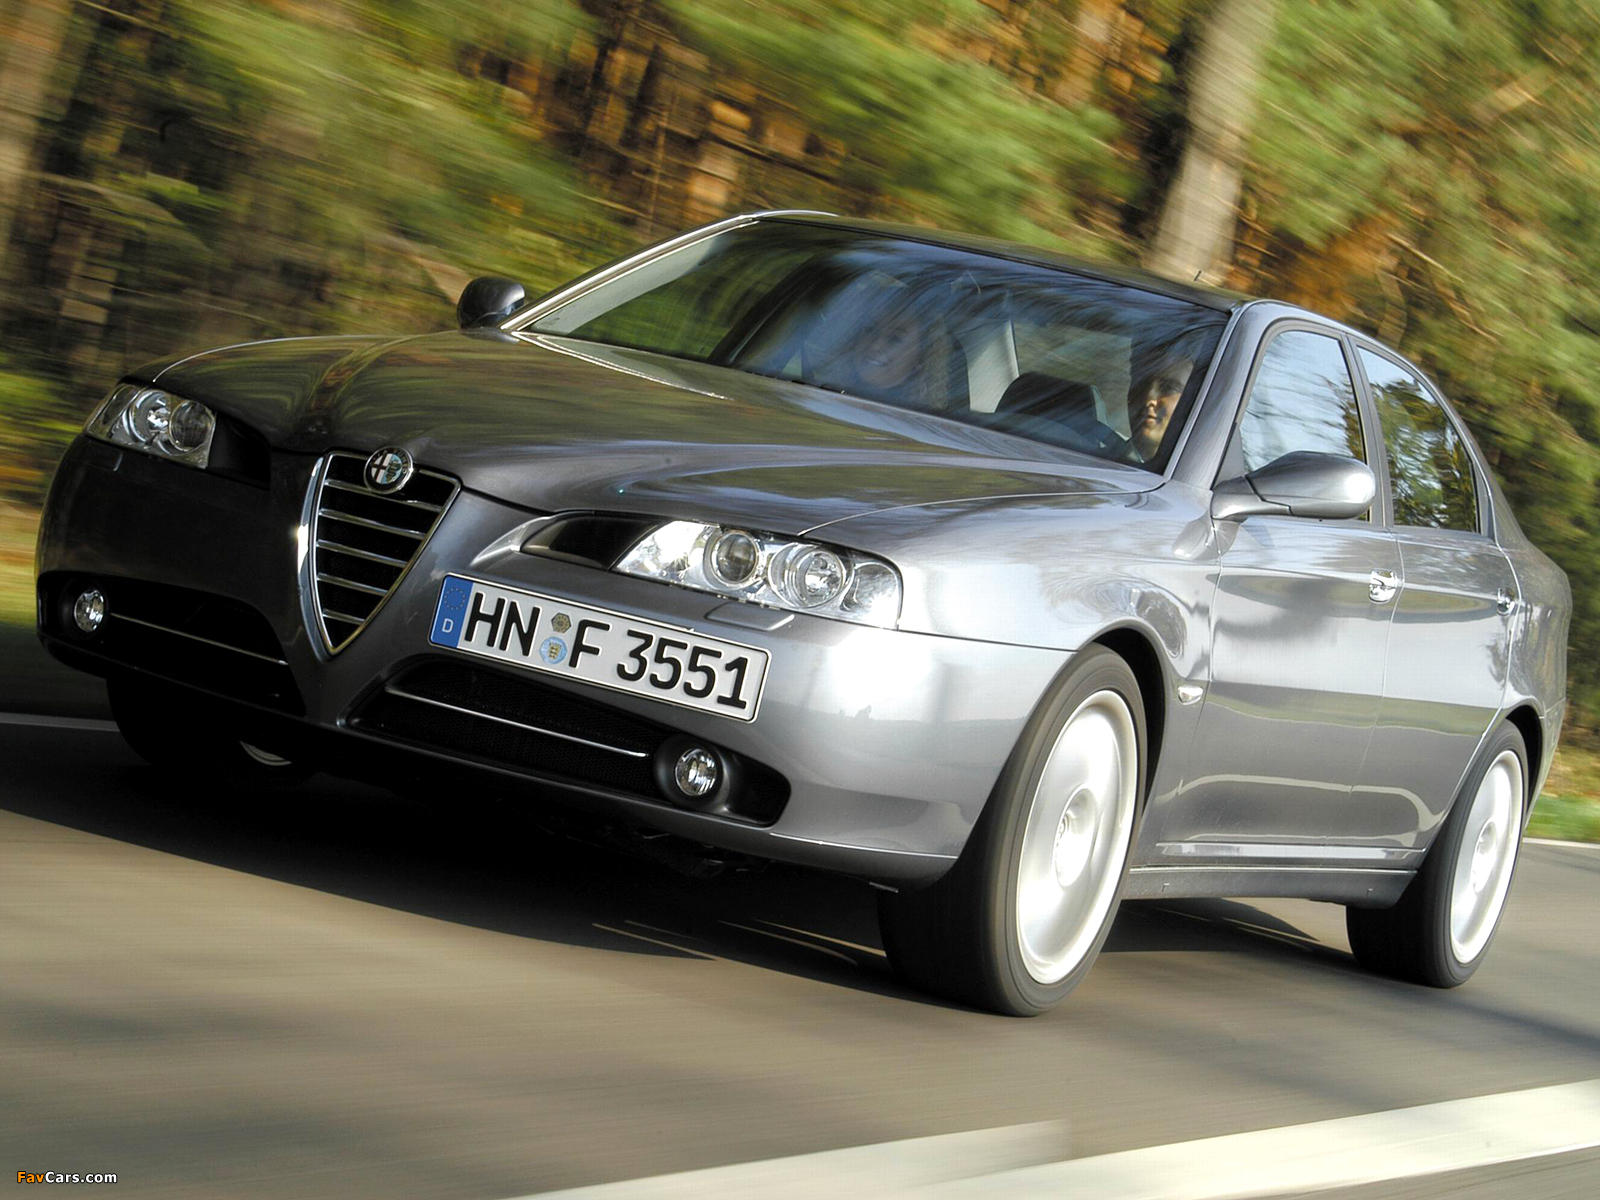 Alfa-Romeo 166  3.0 i V6 24V 226 KM - dane techniczne, wymiary, spalanie i opinie